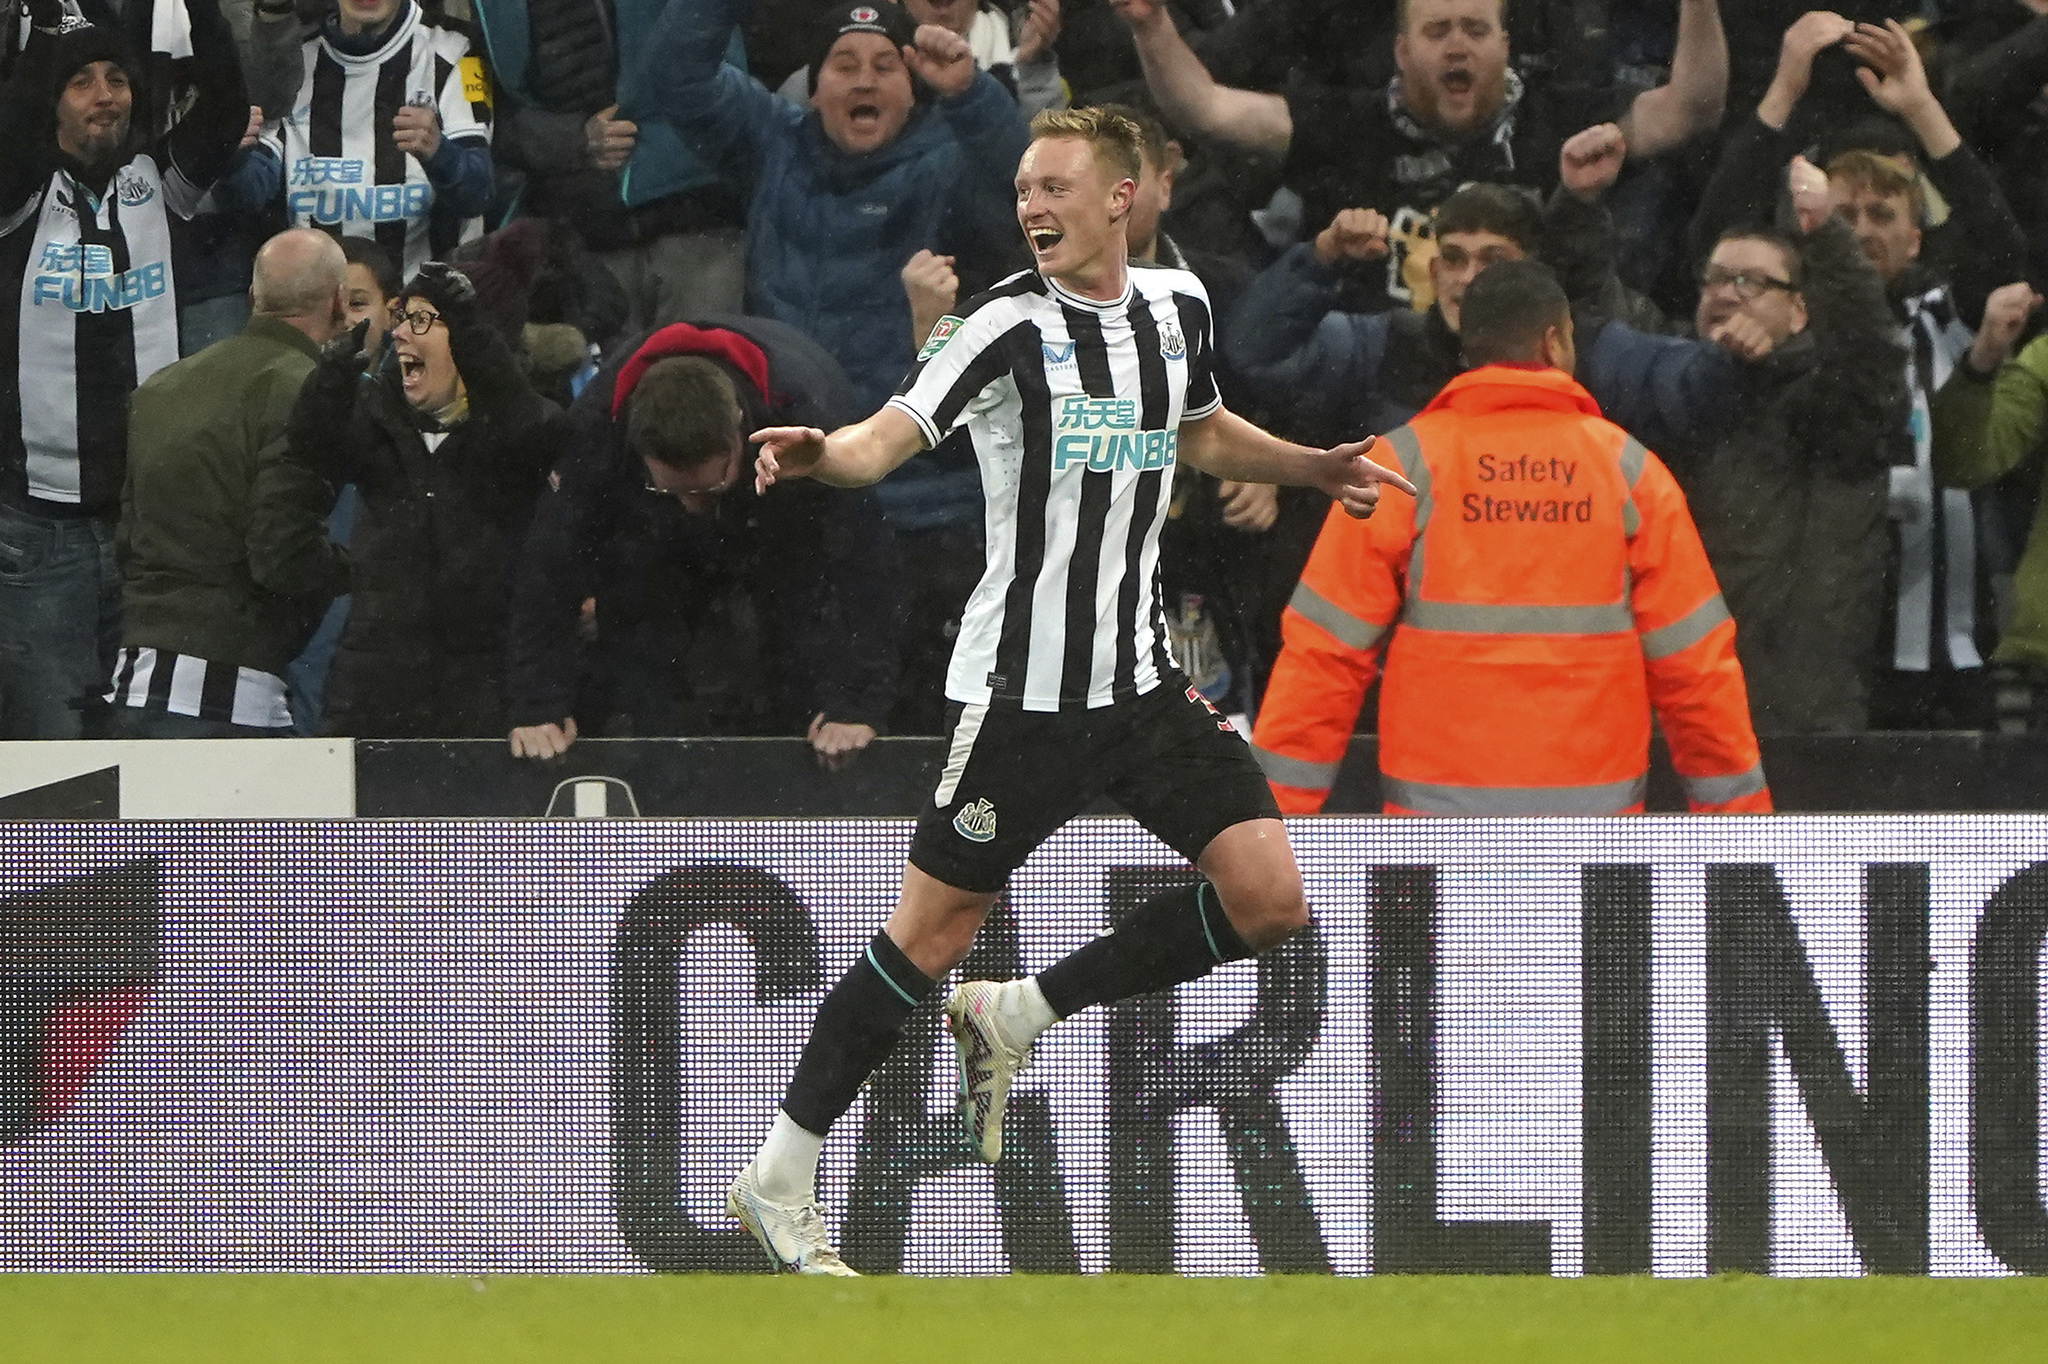 Newcastle United's Sean Longstaff celebrates scoring